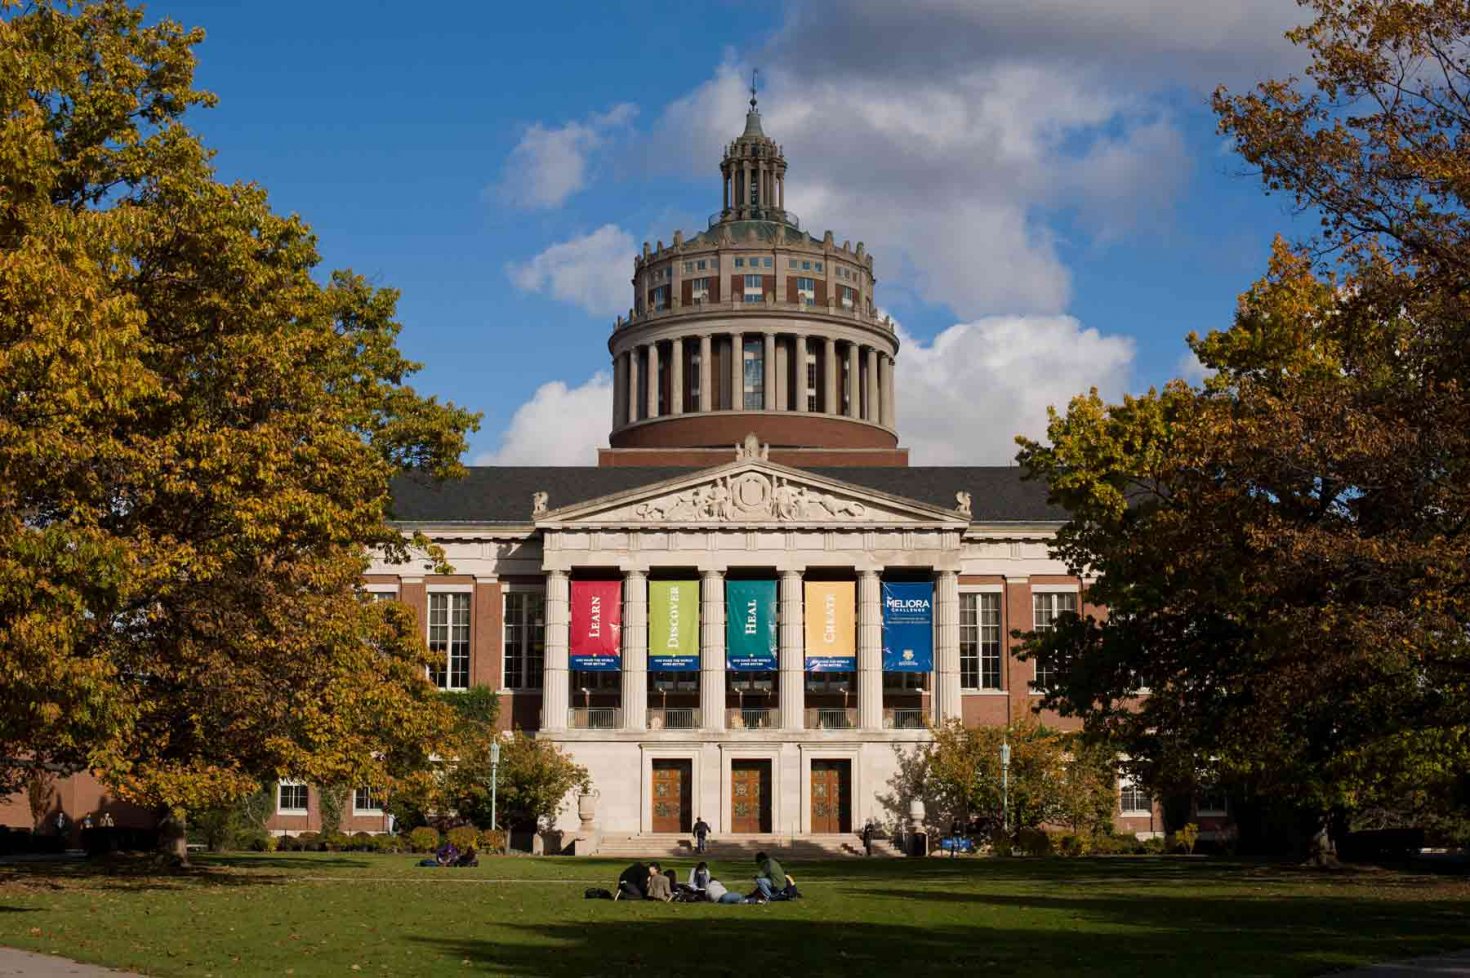 Memorial Art Gallery of the University of Rochester